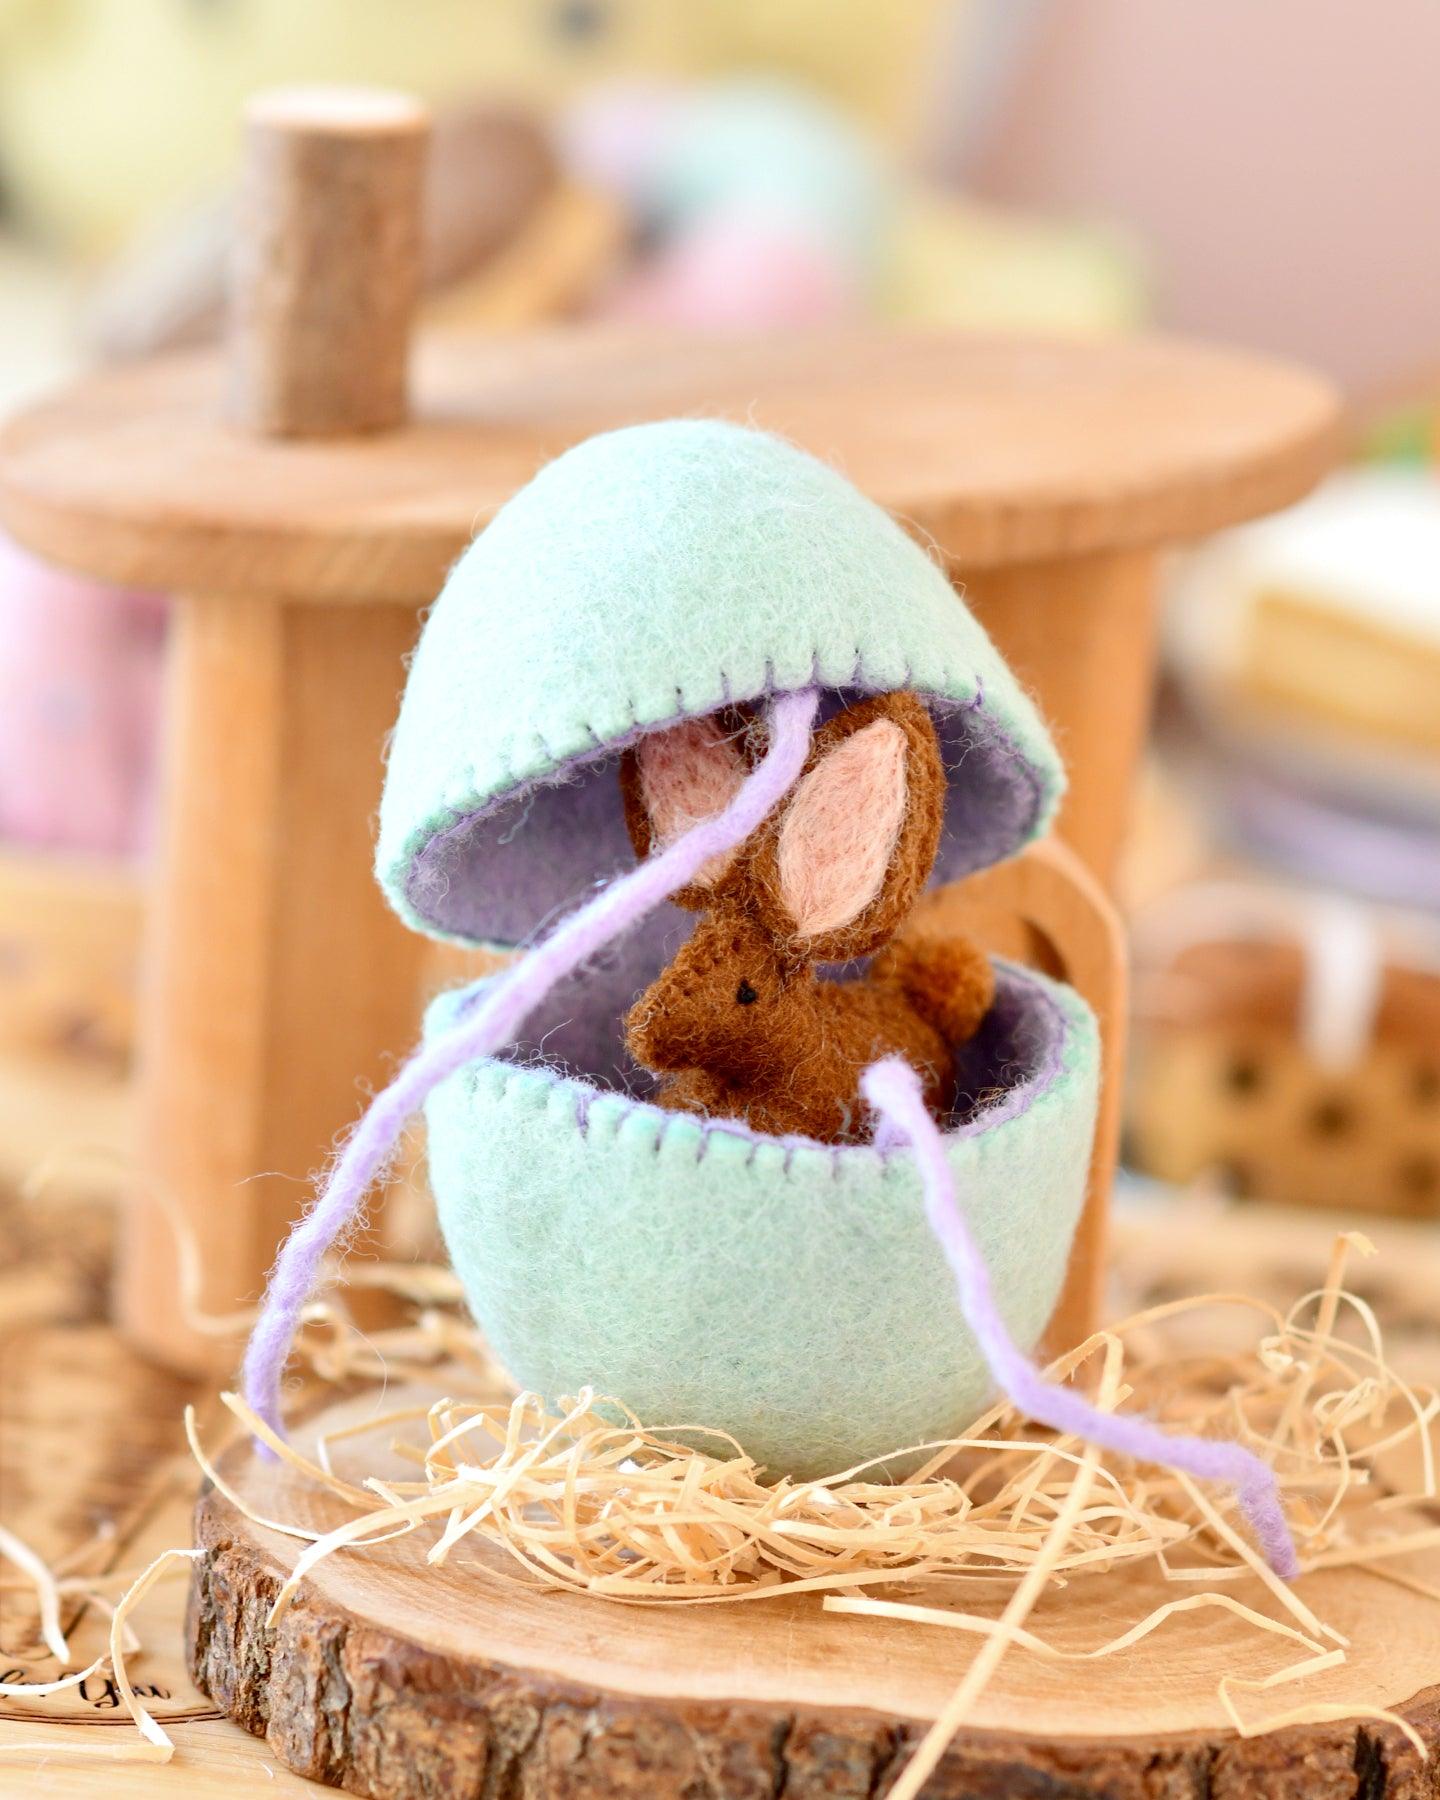 Felt Surprise Egg with Brown Bunny Inside - Tara Treasures